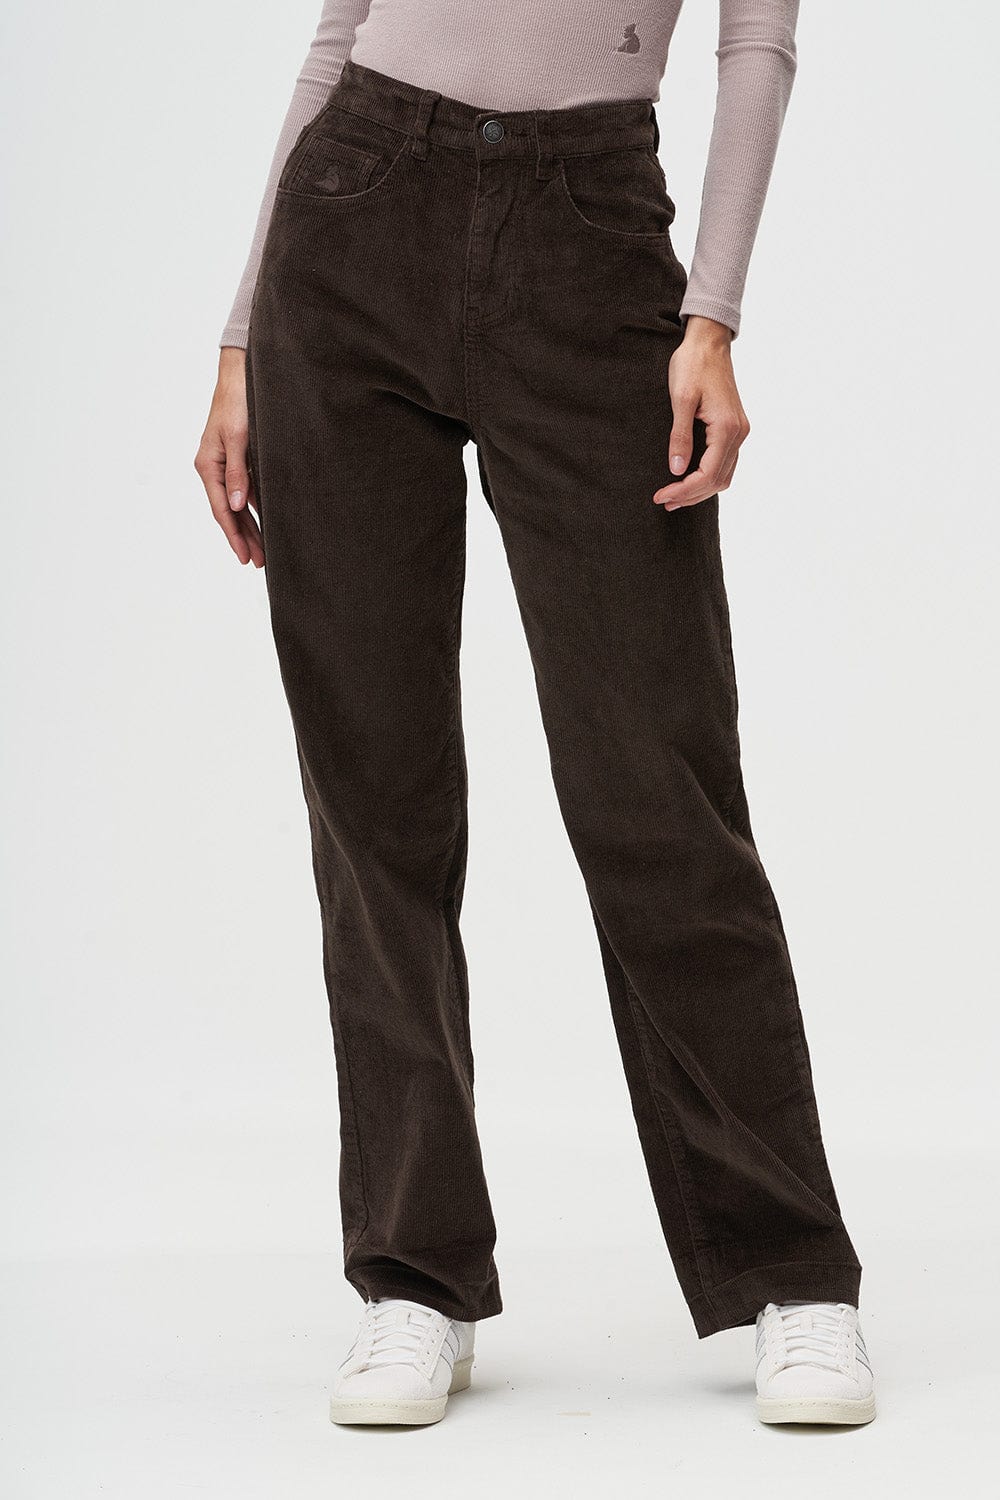 BDG Color Corduroy High-Rise Mom Pant  Mom pants, Retro pants, Classic  denim